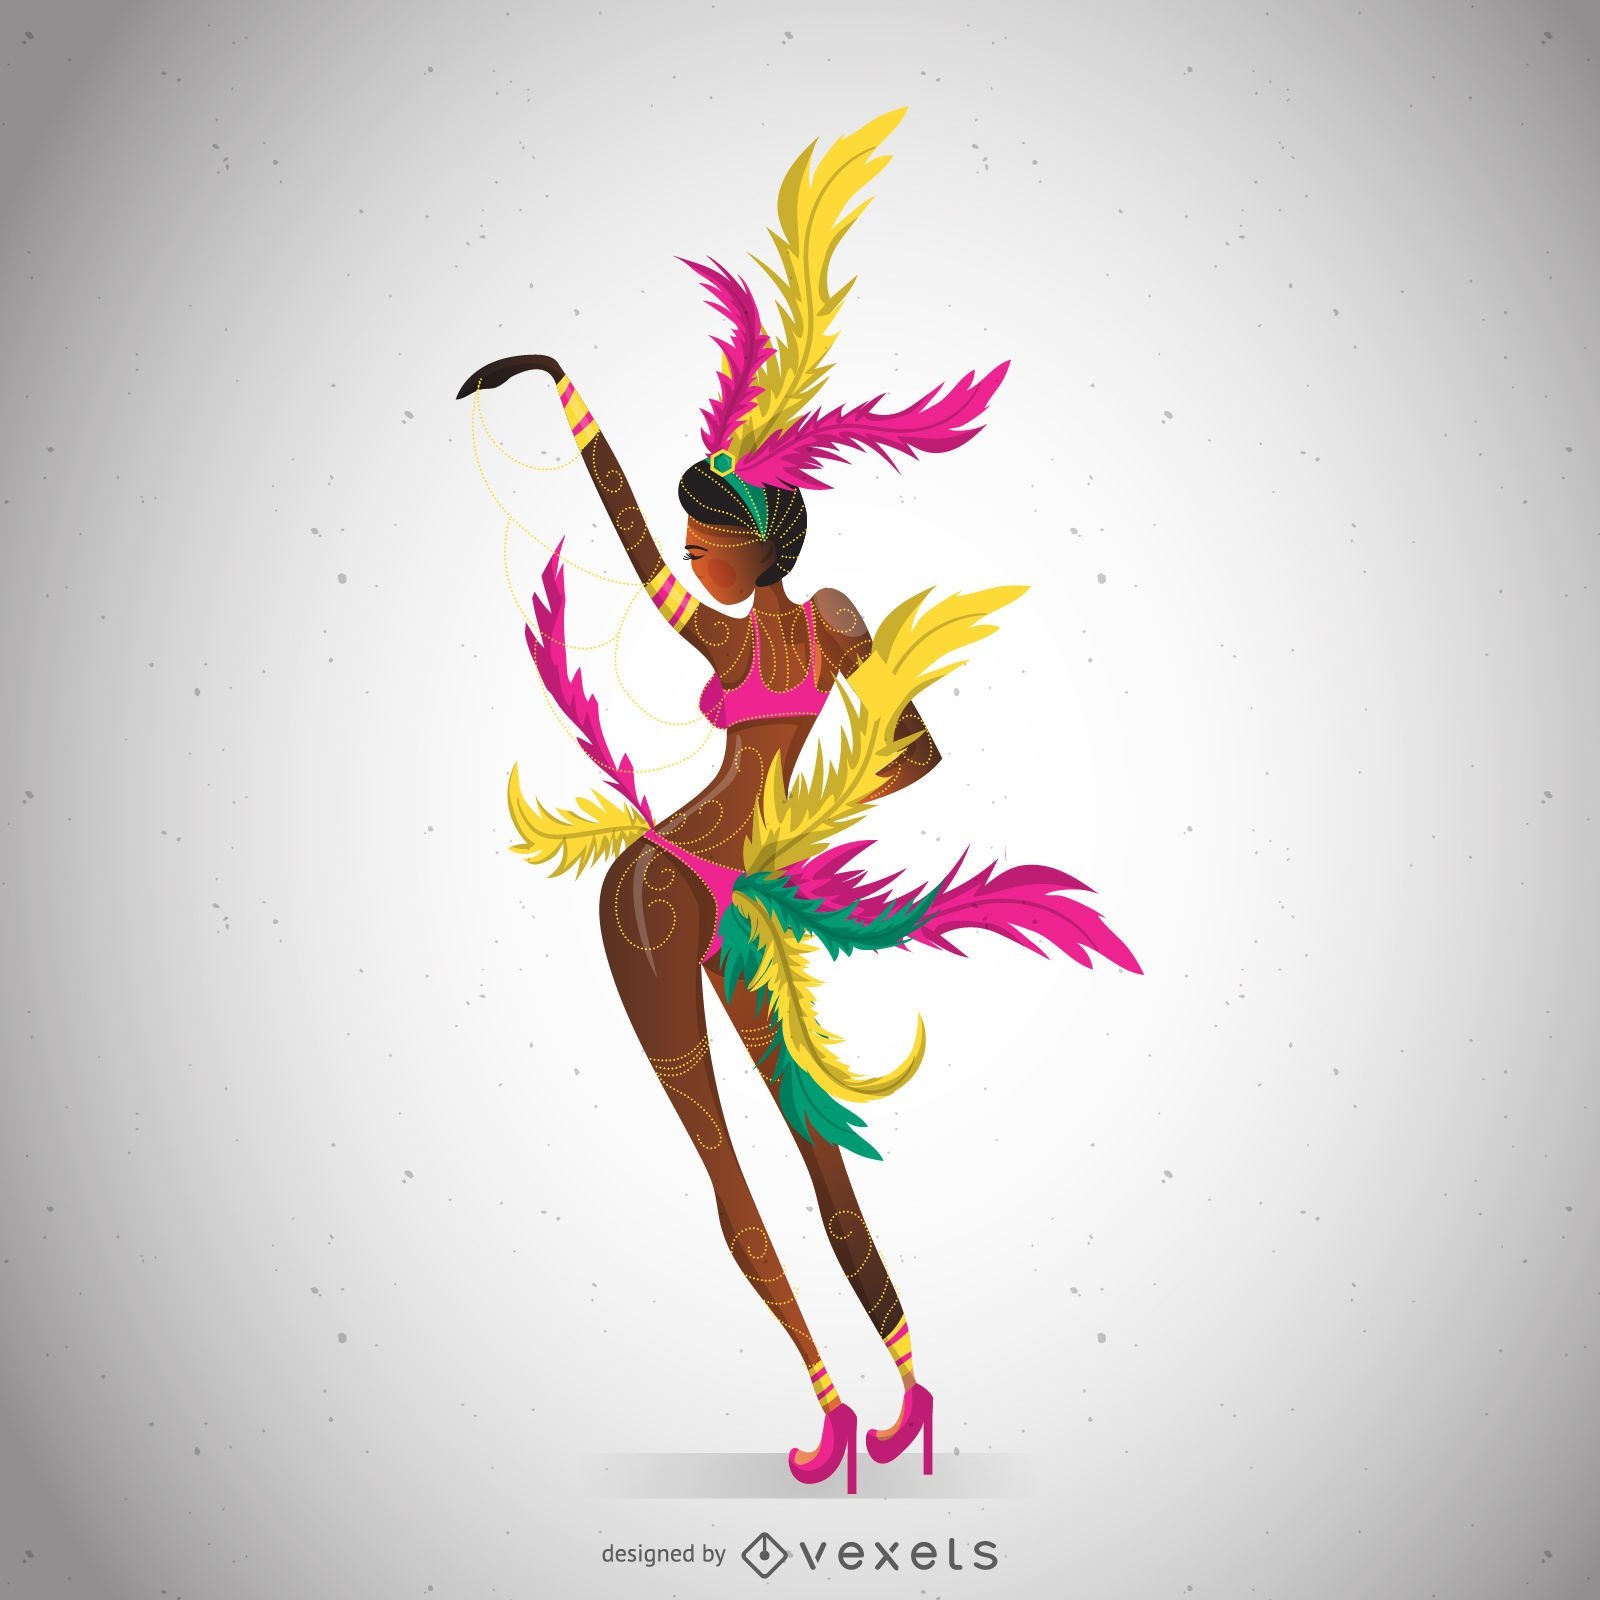 Bailarina de carnaval ilustrada posando